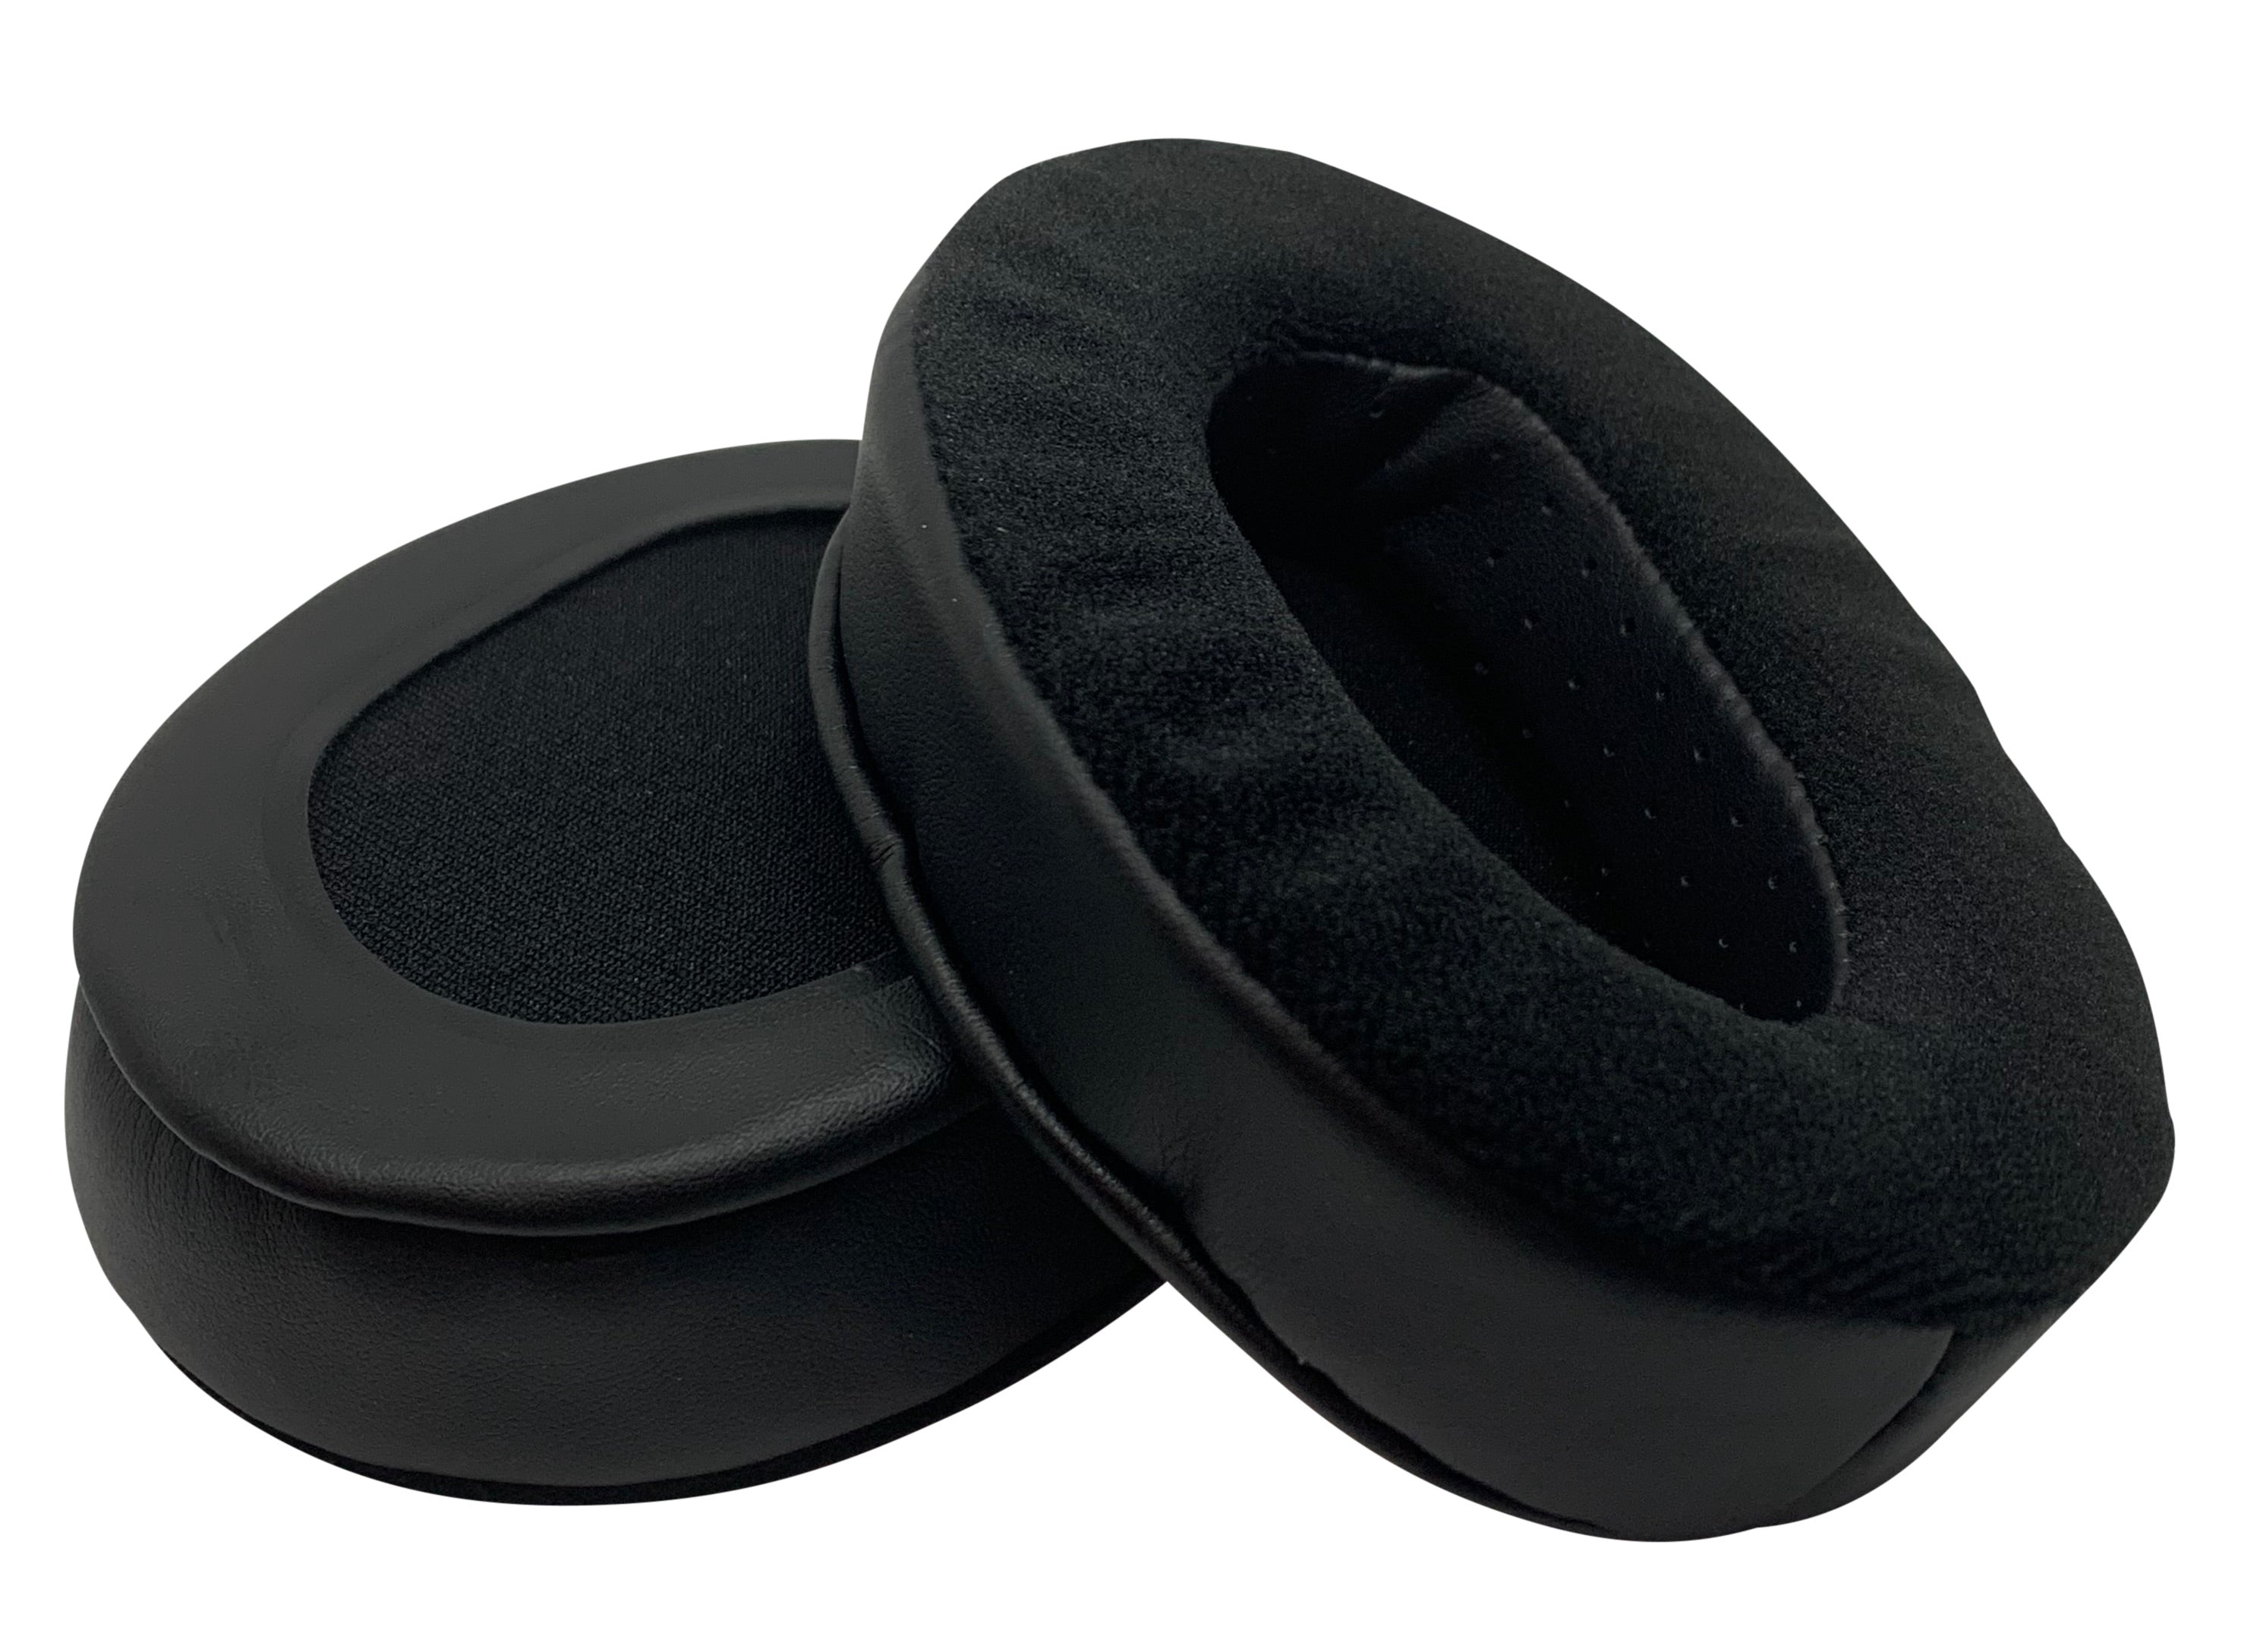 CentralSound Premium XL Memory Foam Ear Pad Cushions for Audio-Technica Headphones - CentralSound